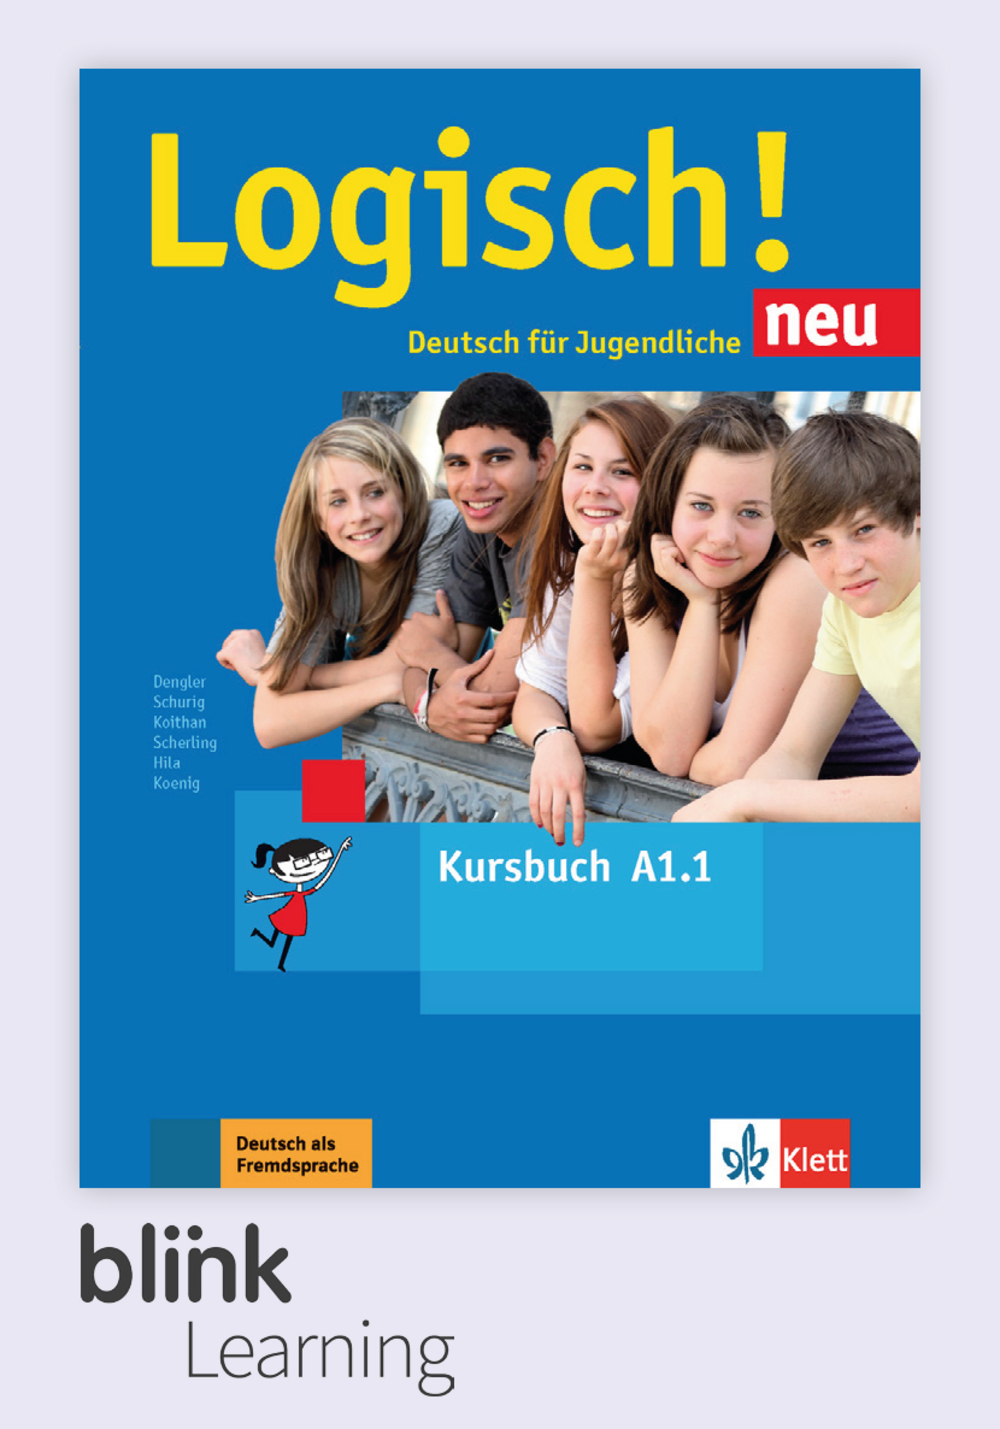 Logisch! NEU A1.1 Digital Kursbuch für Lernende / Цифровой учебник для ученика